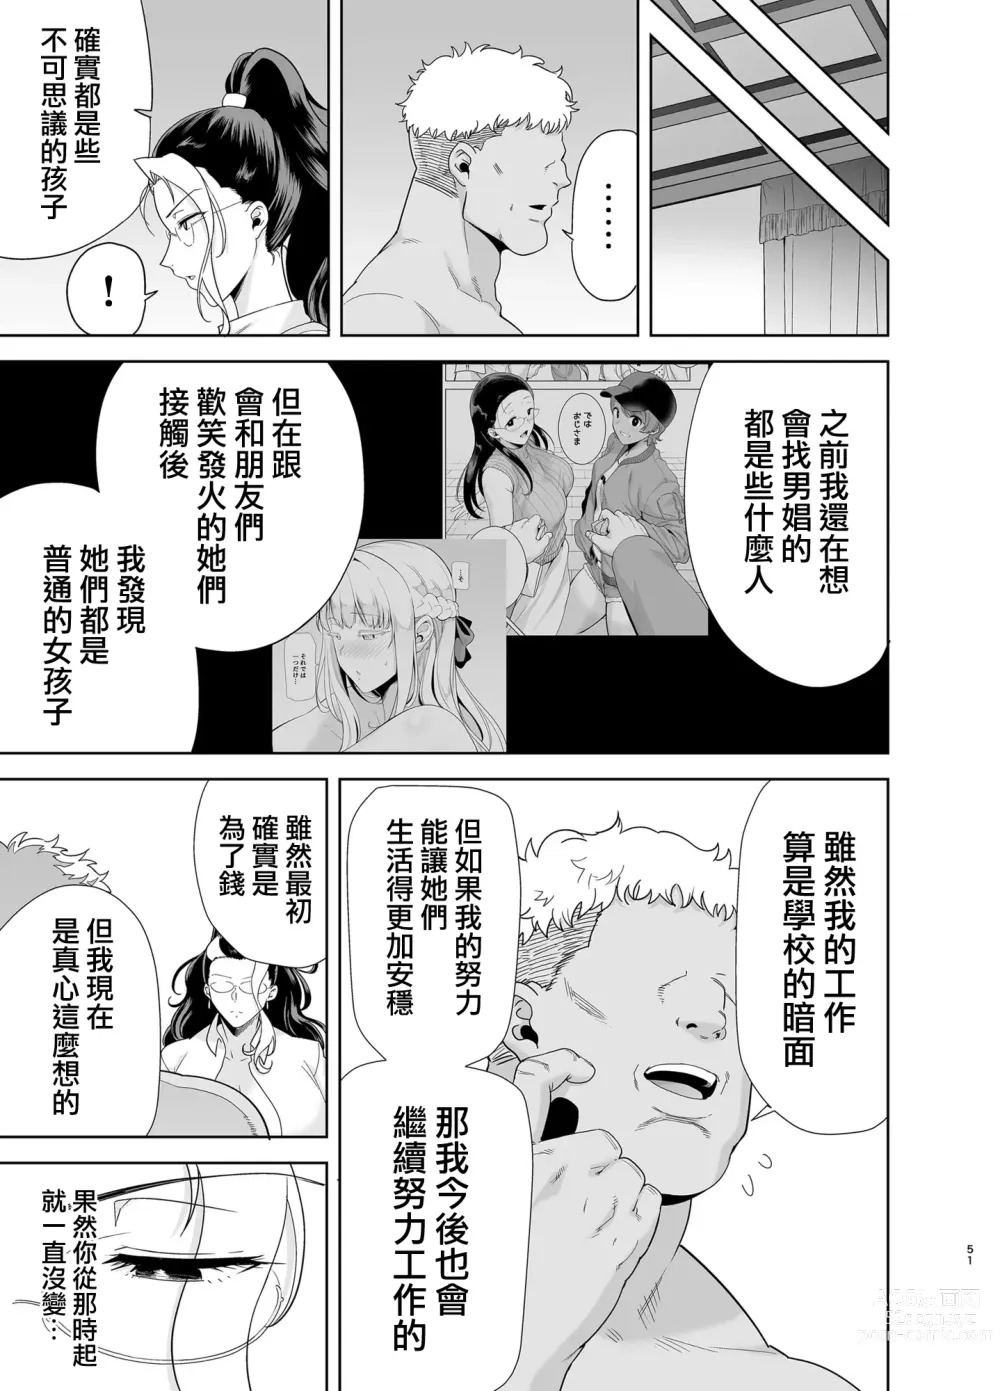 Page 50 of manga 聖華女学院高等部公認竿おじさん 5